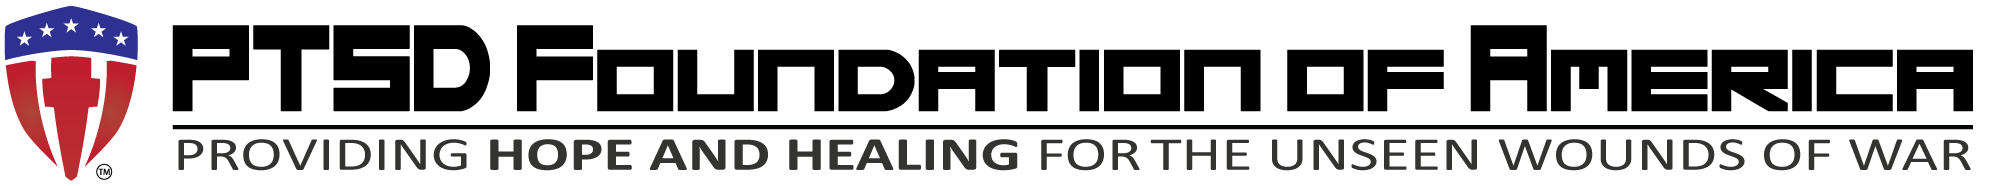 PTSD Foundation of America logo and link